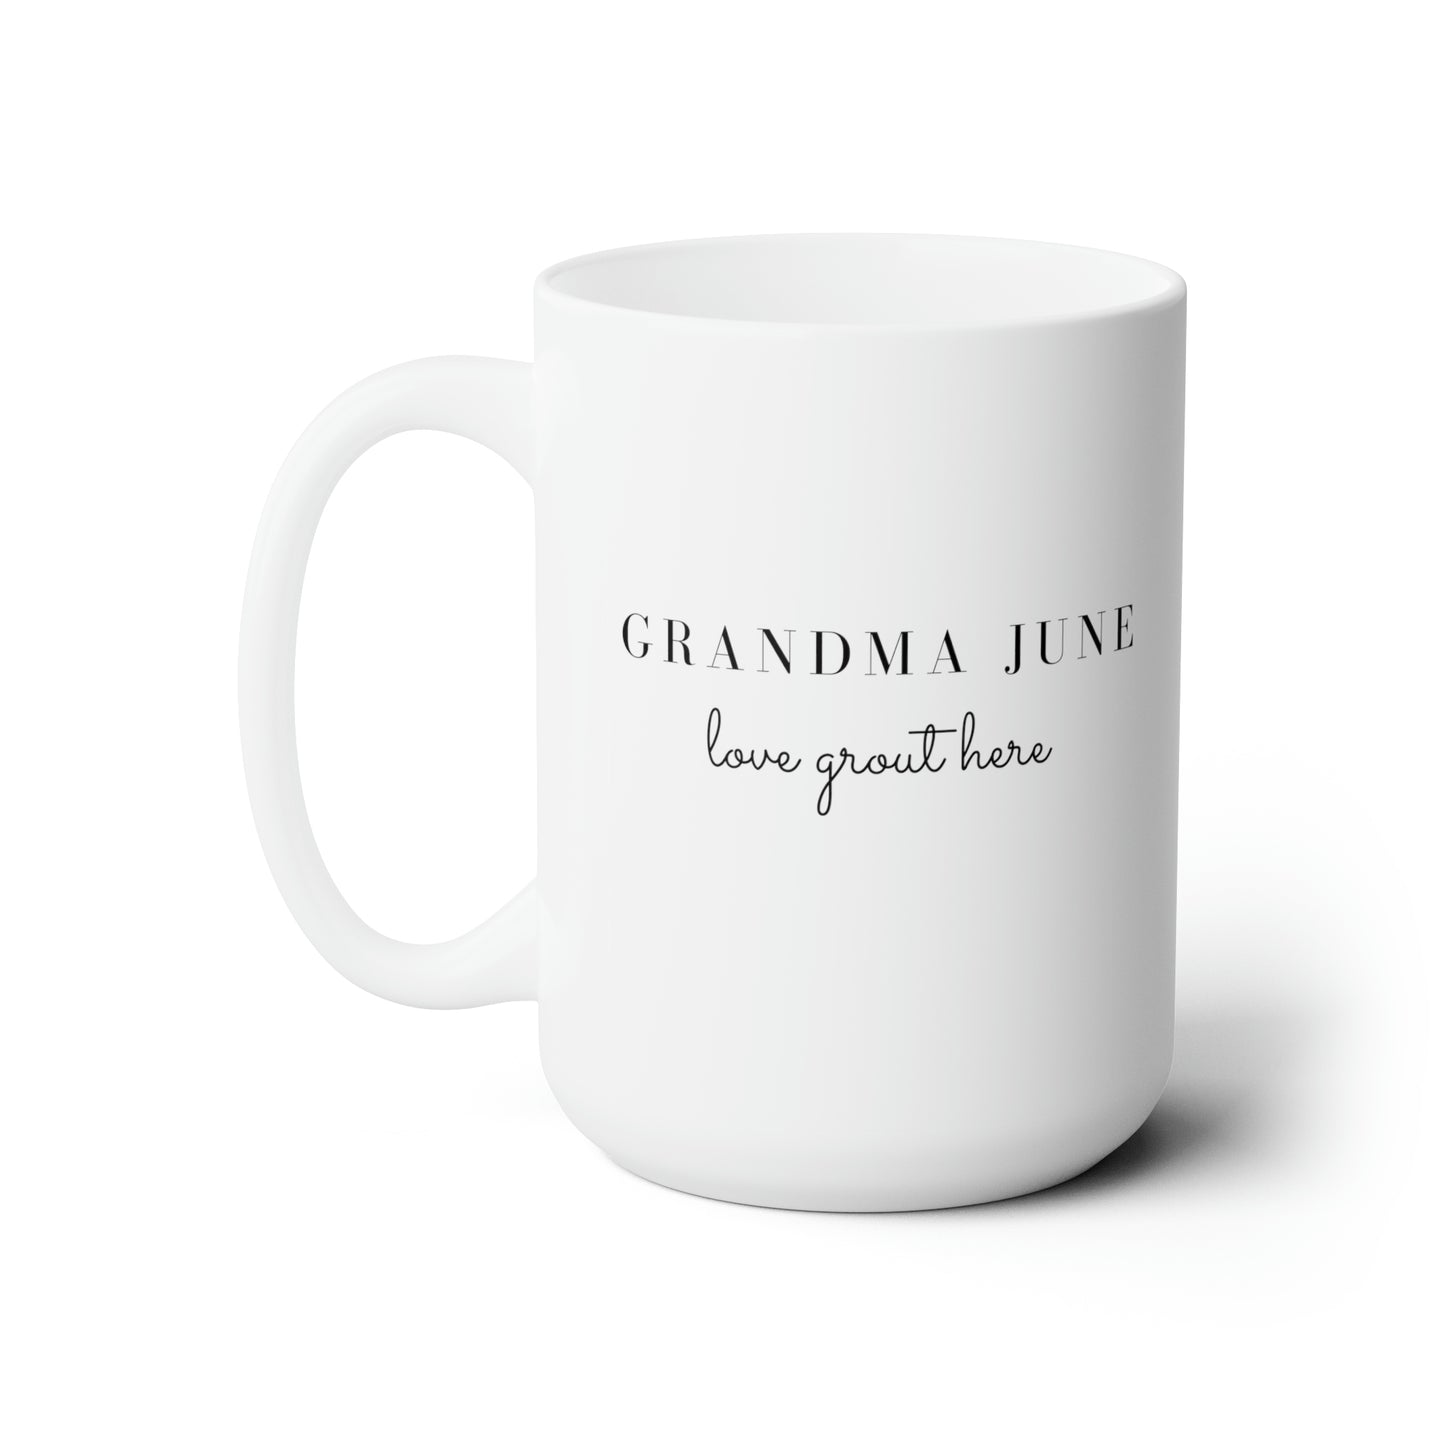 Grand Maa June Customise Ceramic Mug 15oz, White